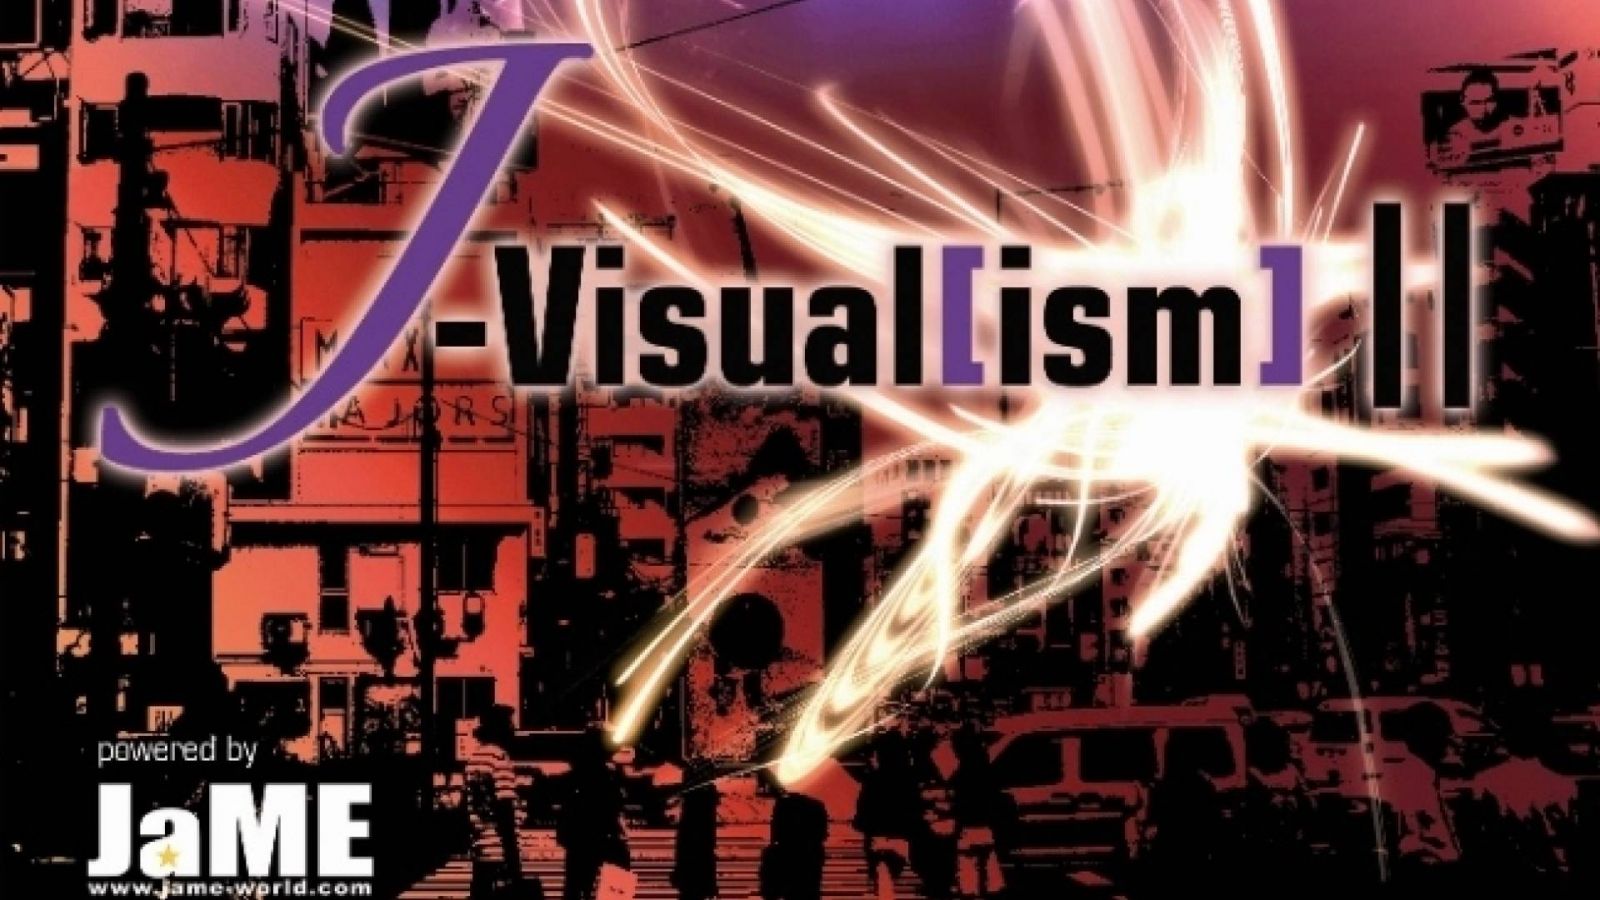 J-Visual[ism] 2 © CLJ Records, Marine Halfort